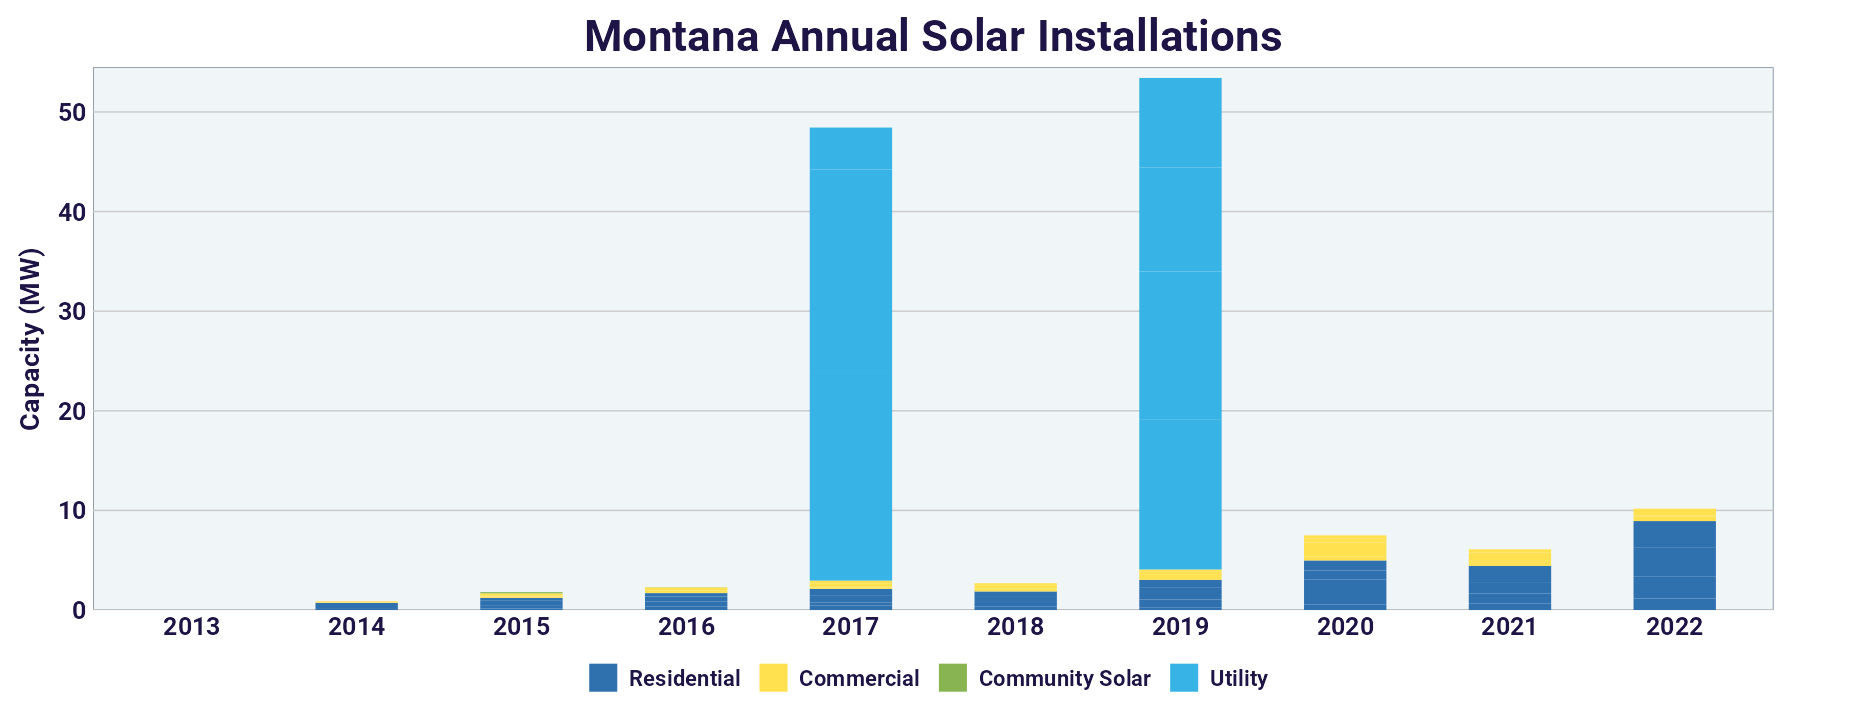 Montana Annual Solar Installations